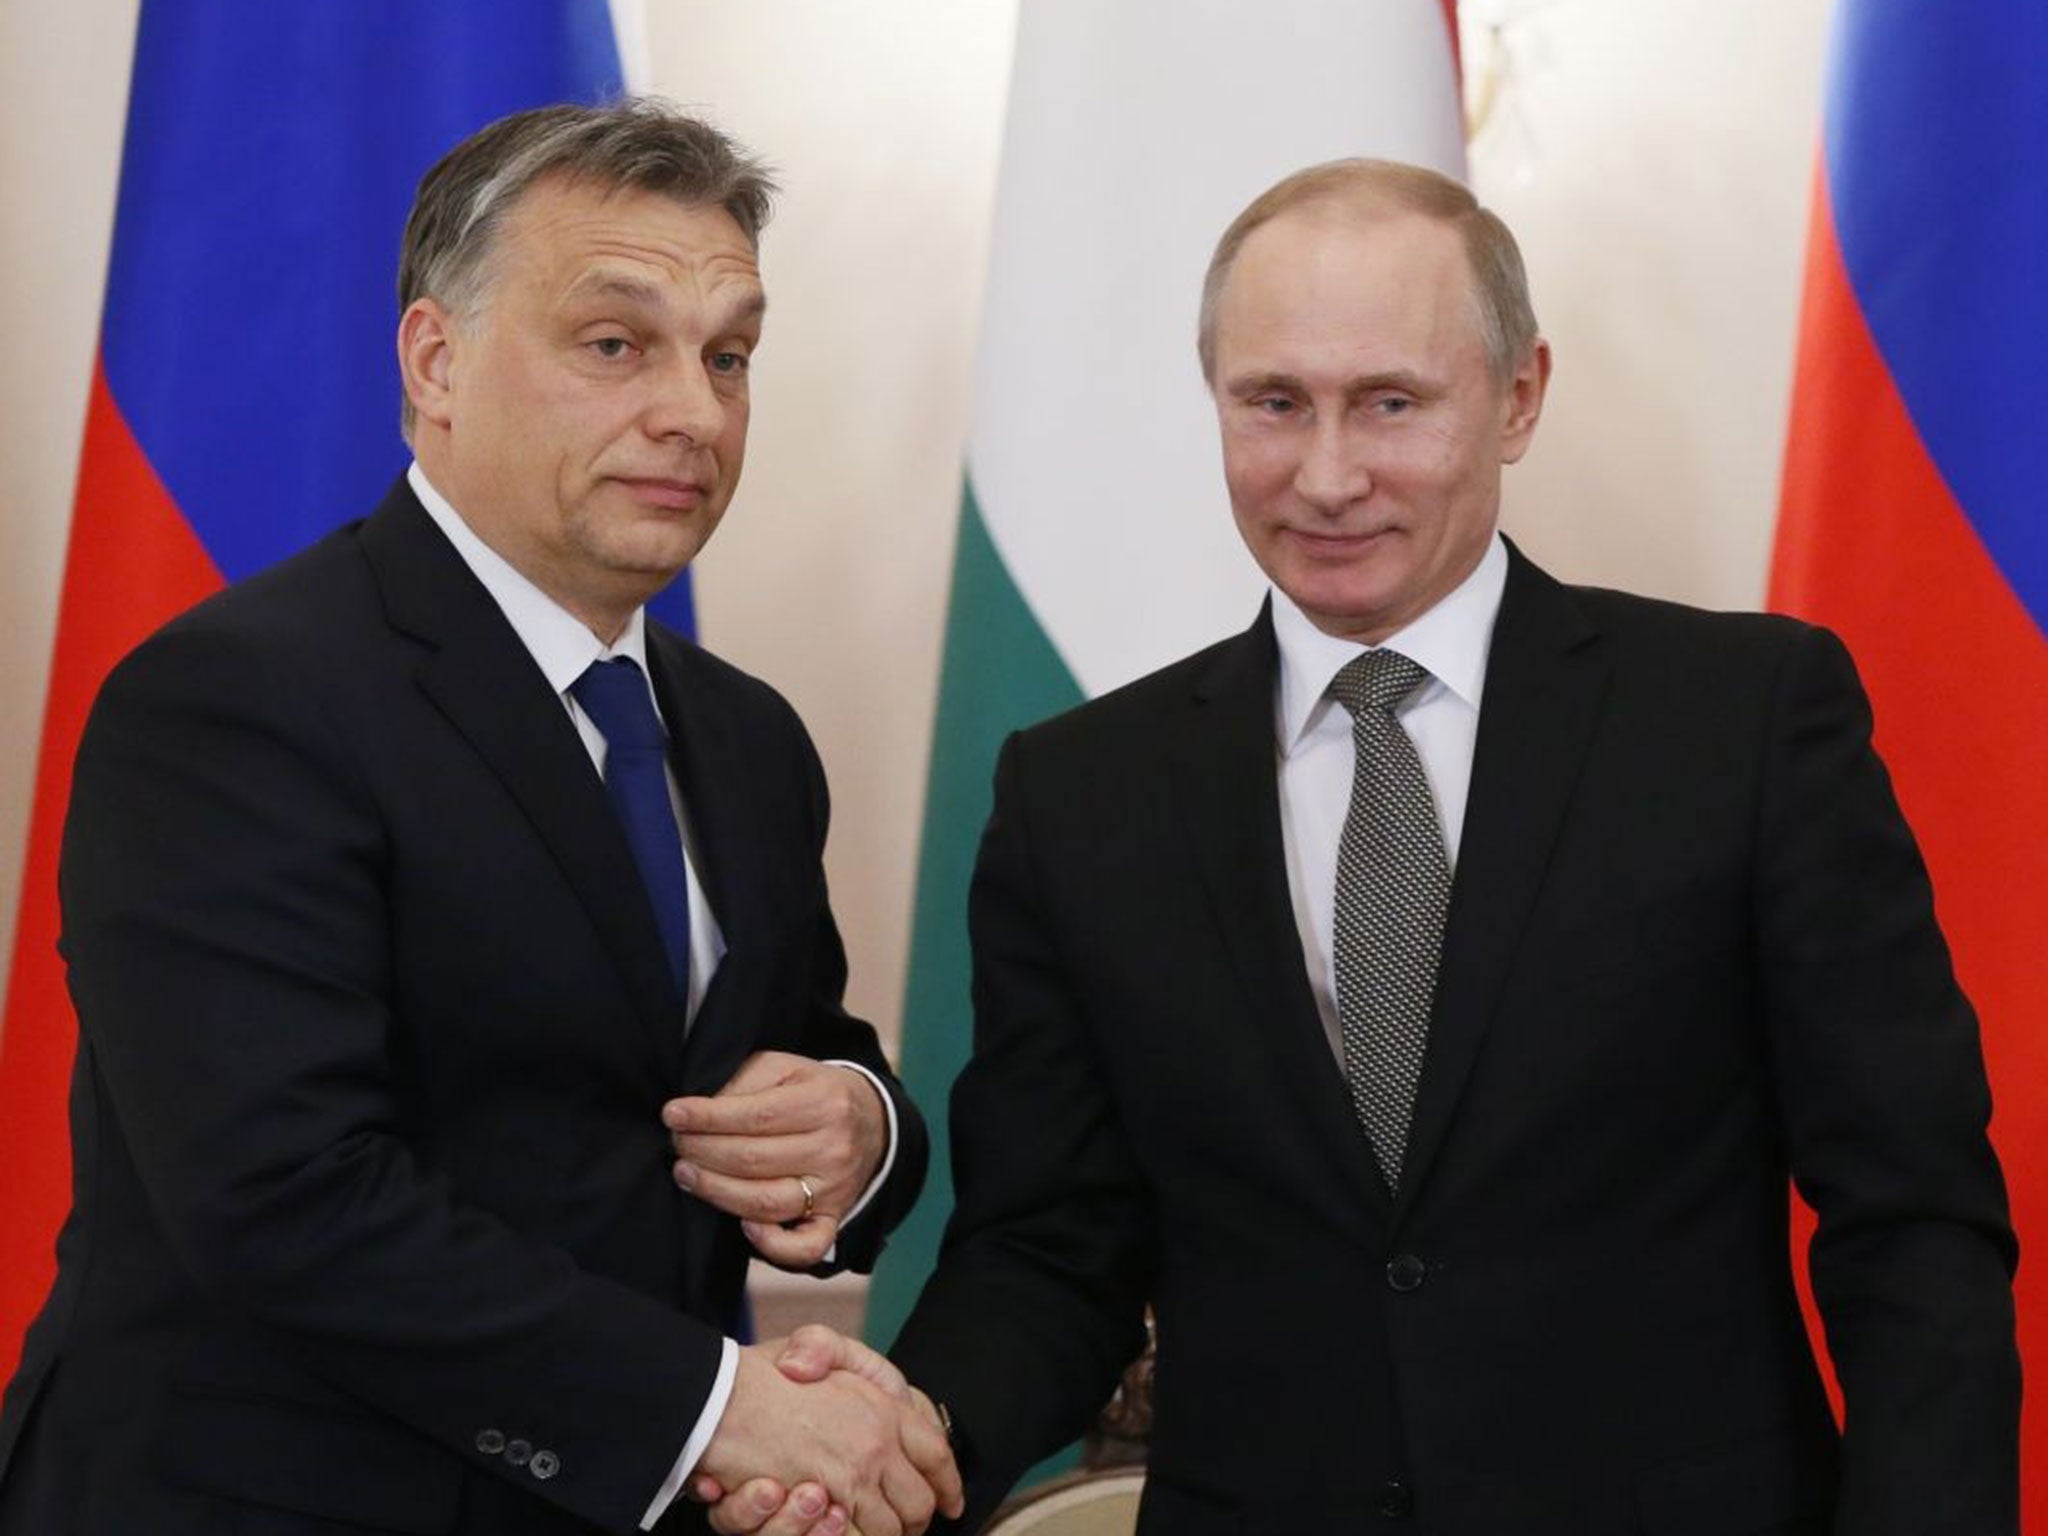 Hungary’s Prime Minister Viktor Orban with Russian leader Vladimir Putin